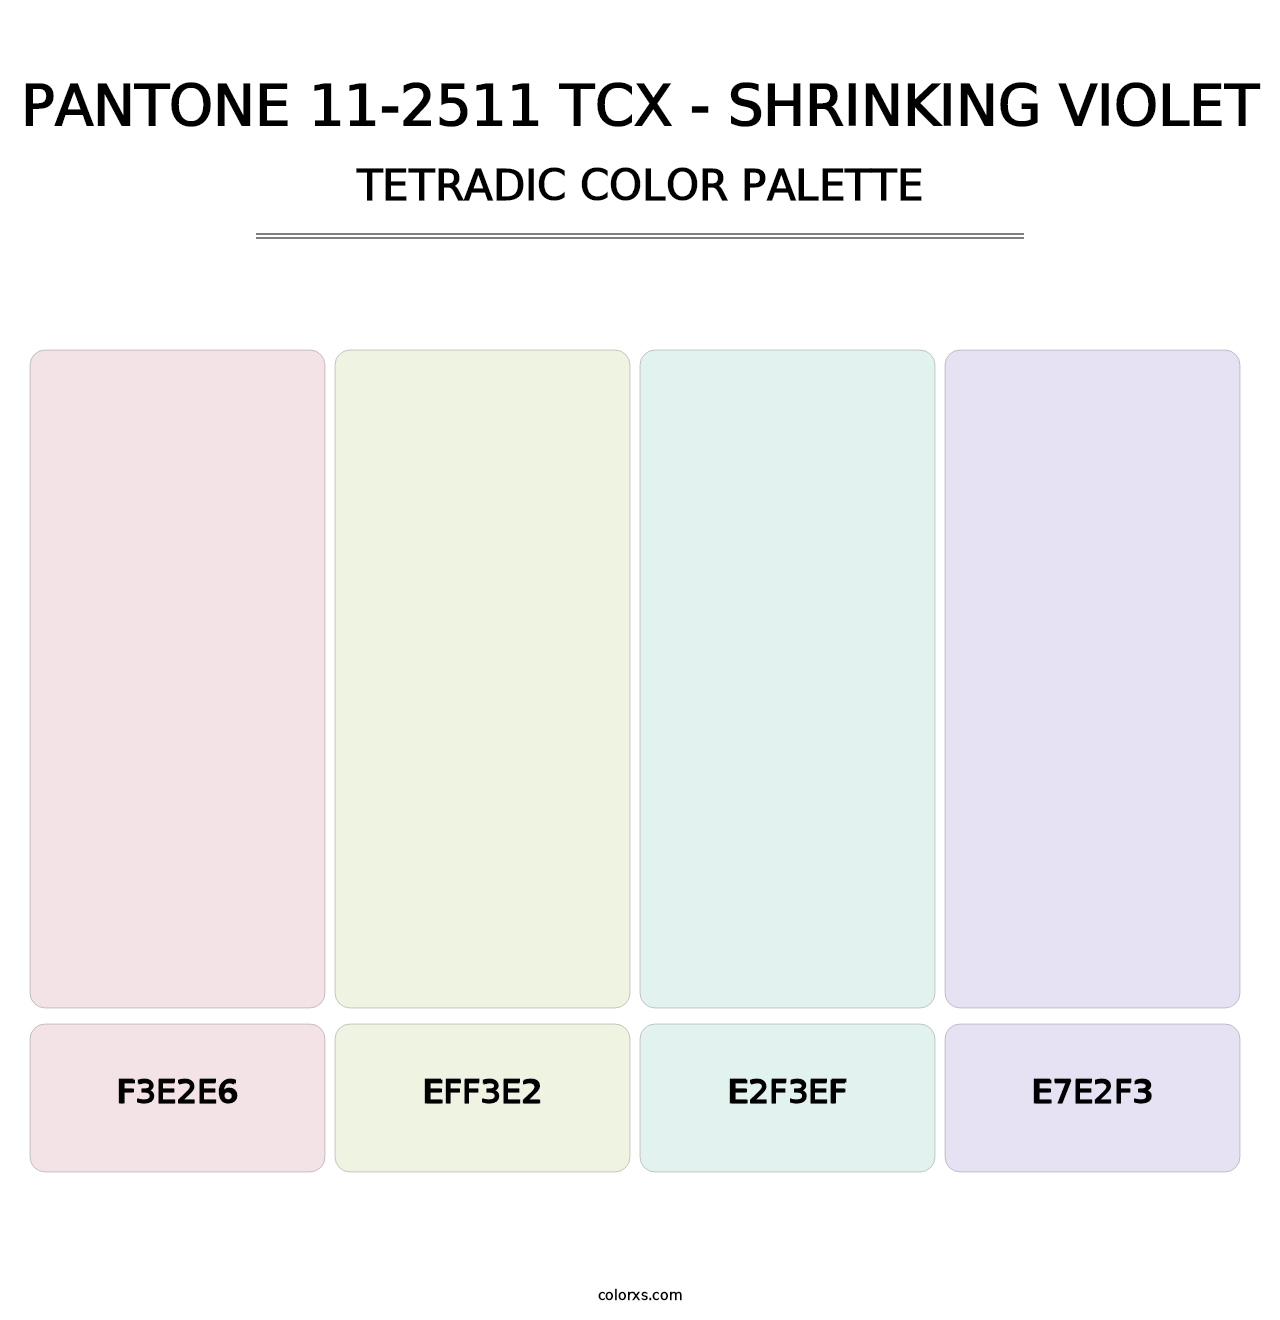 PANTONE 11-2511 TCX - Shrinking Violet - Tetradic Color Palette